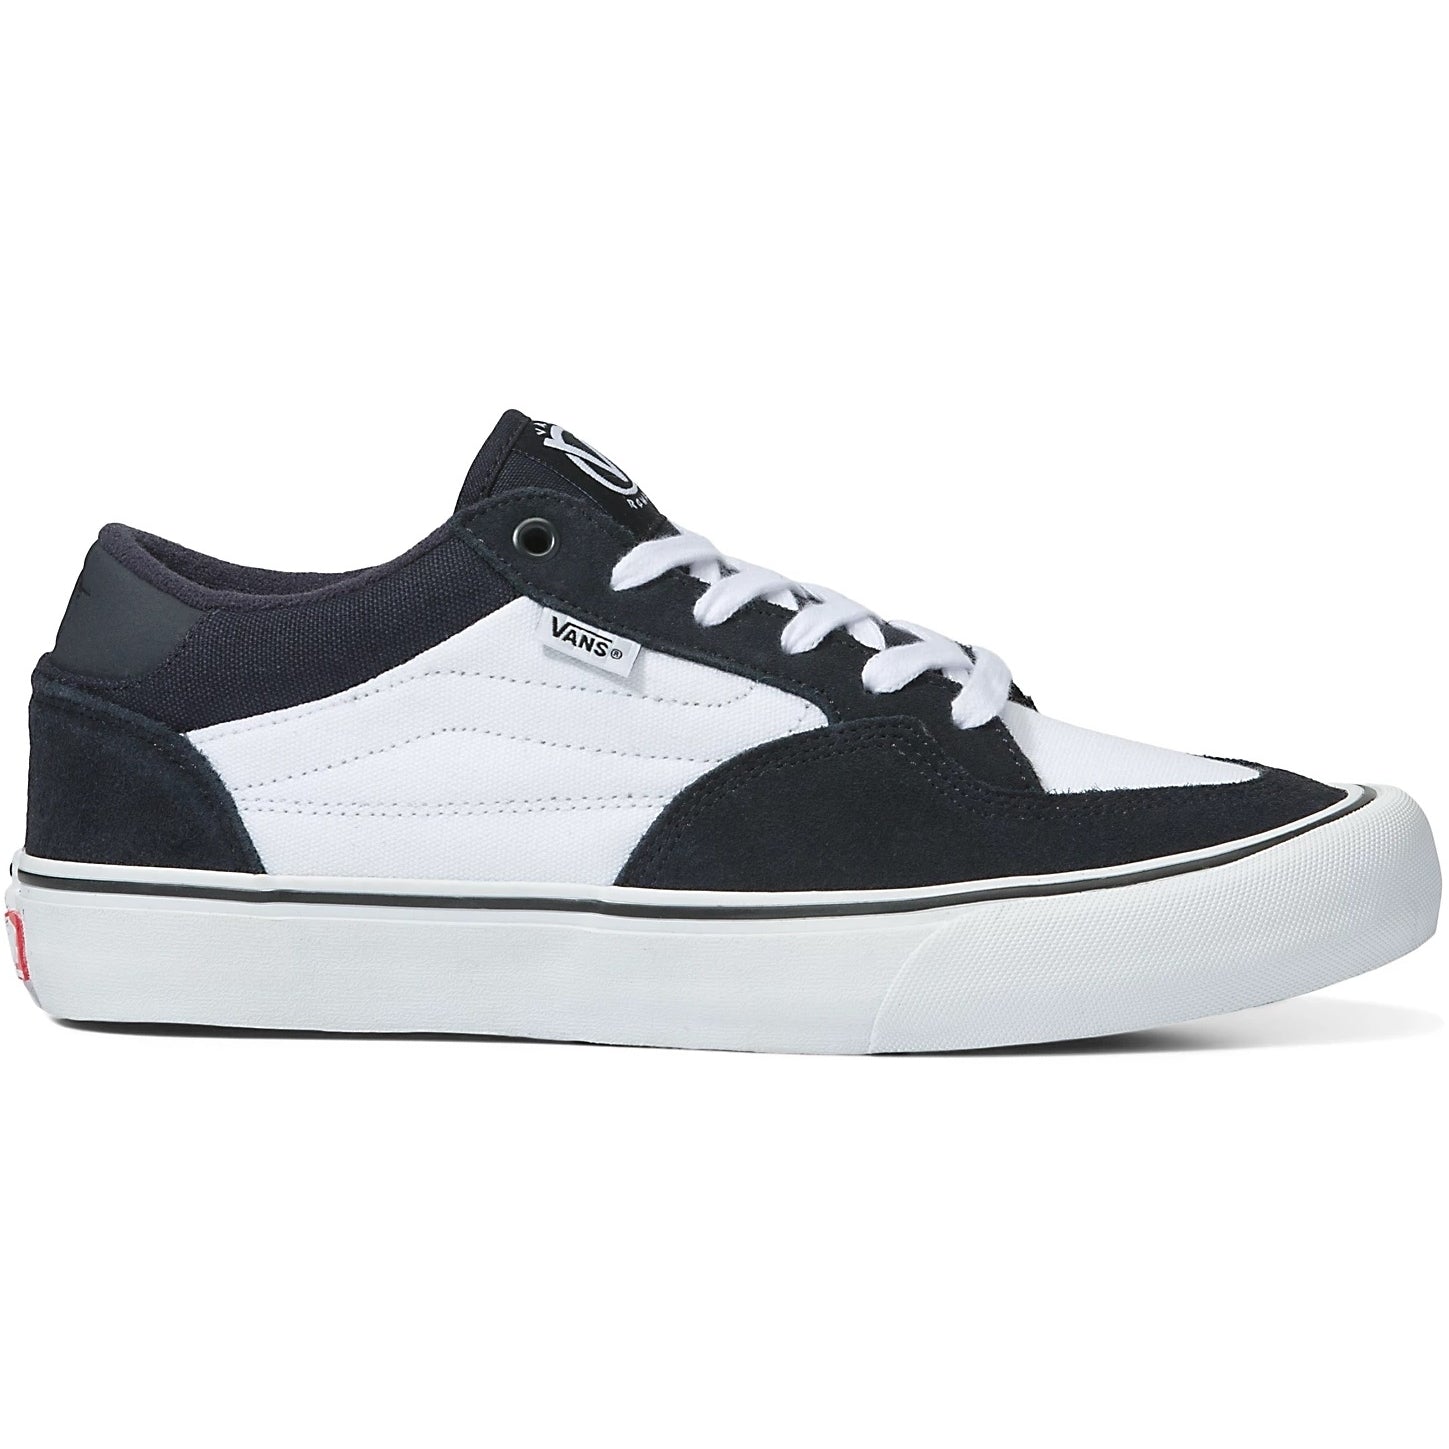 Dark Navy/White Rowan Pro Vans Skate Shoe